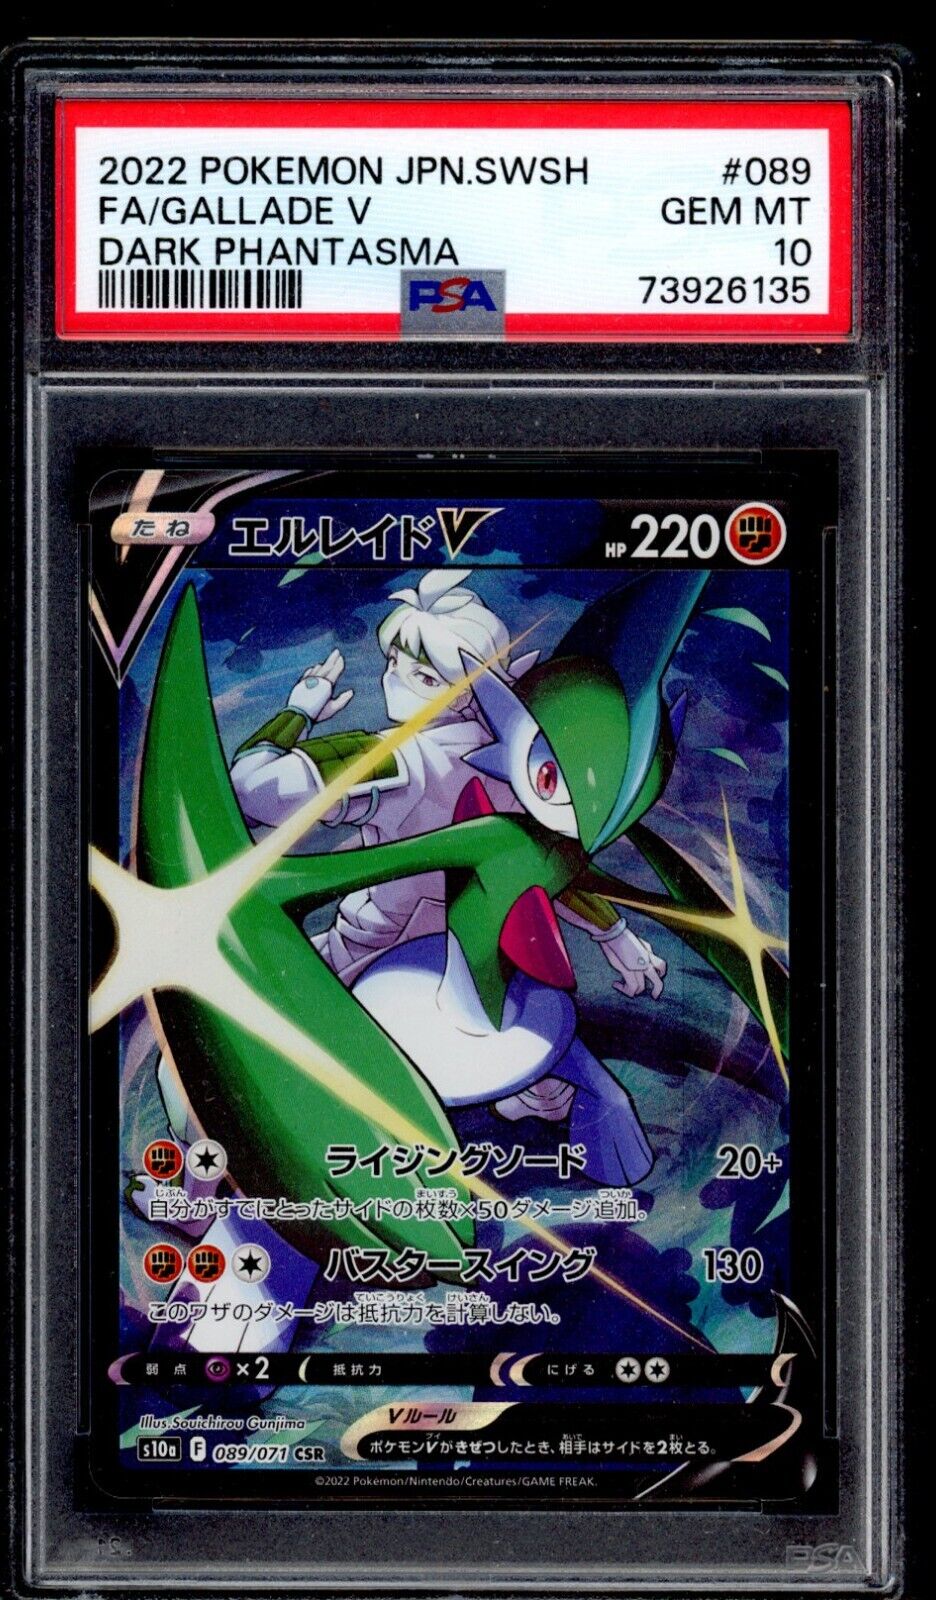 PSA 10 Gallade V 2022 Pokemon Card 089/071 Dark Phantasma